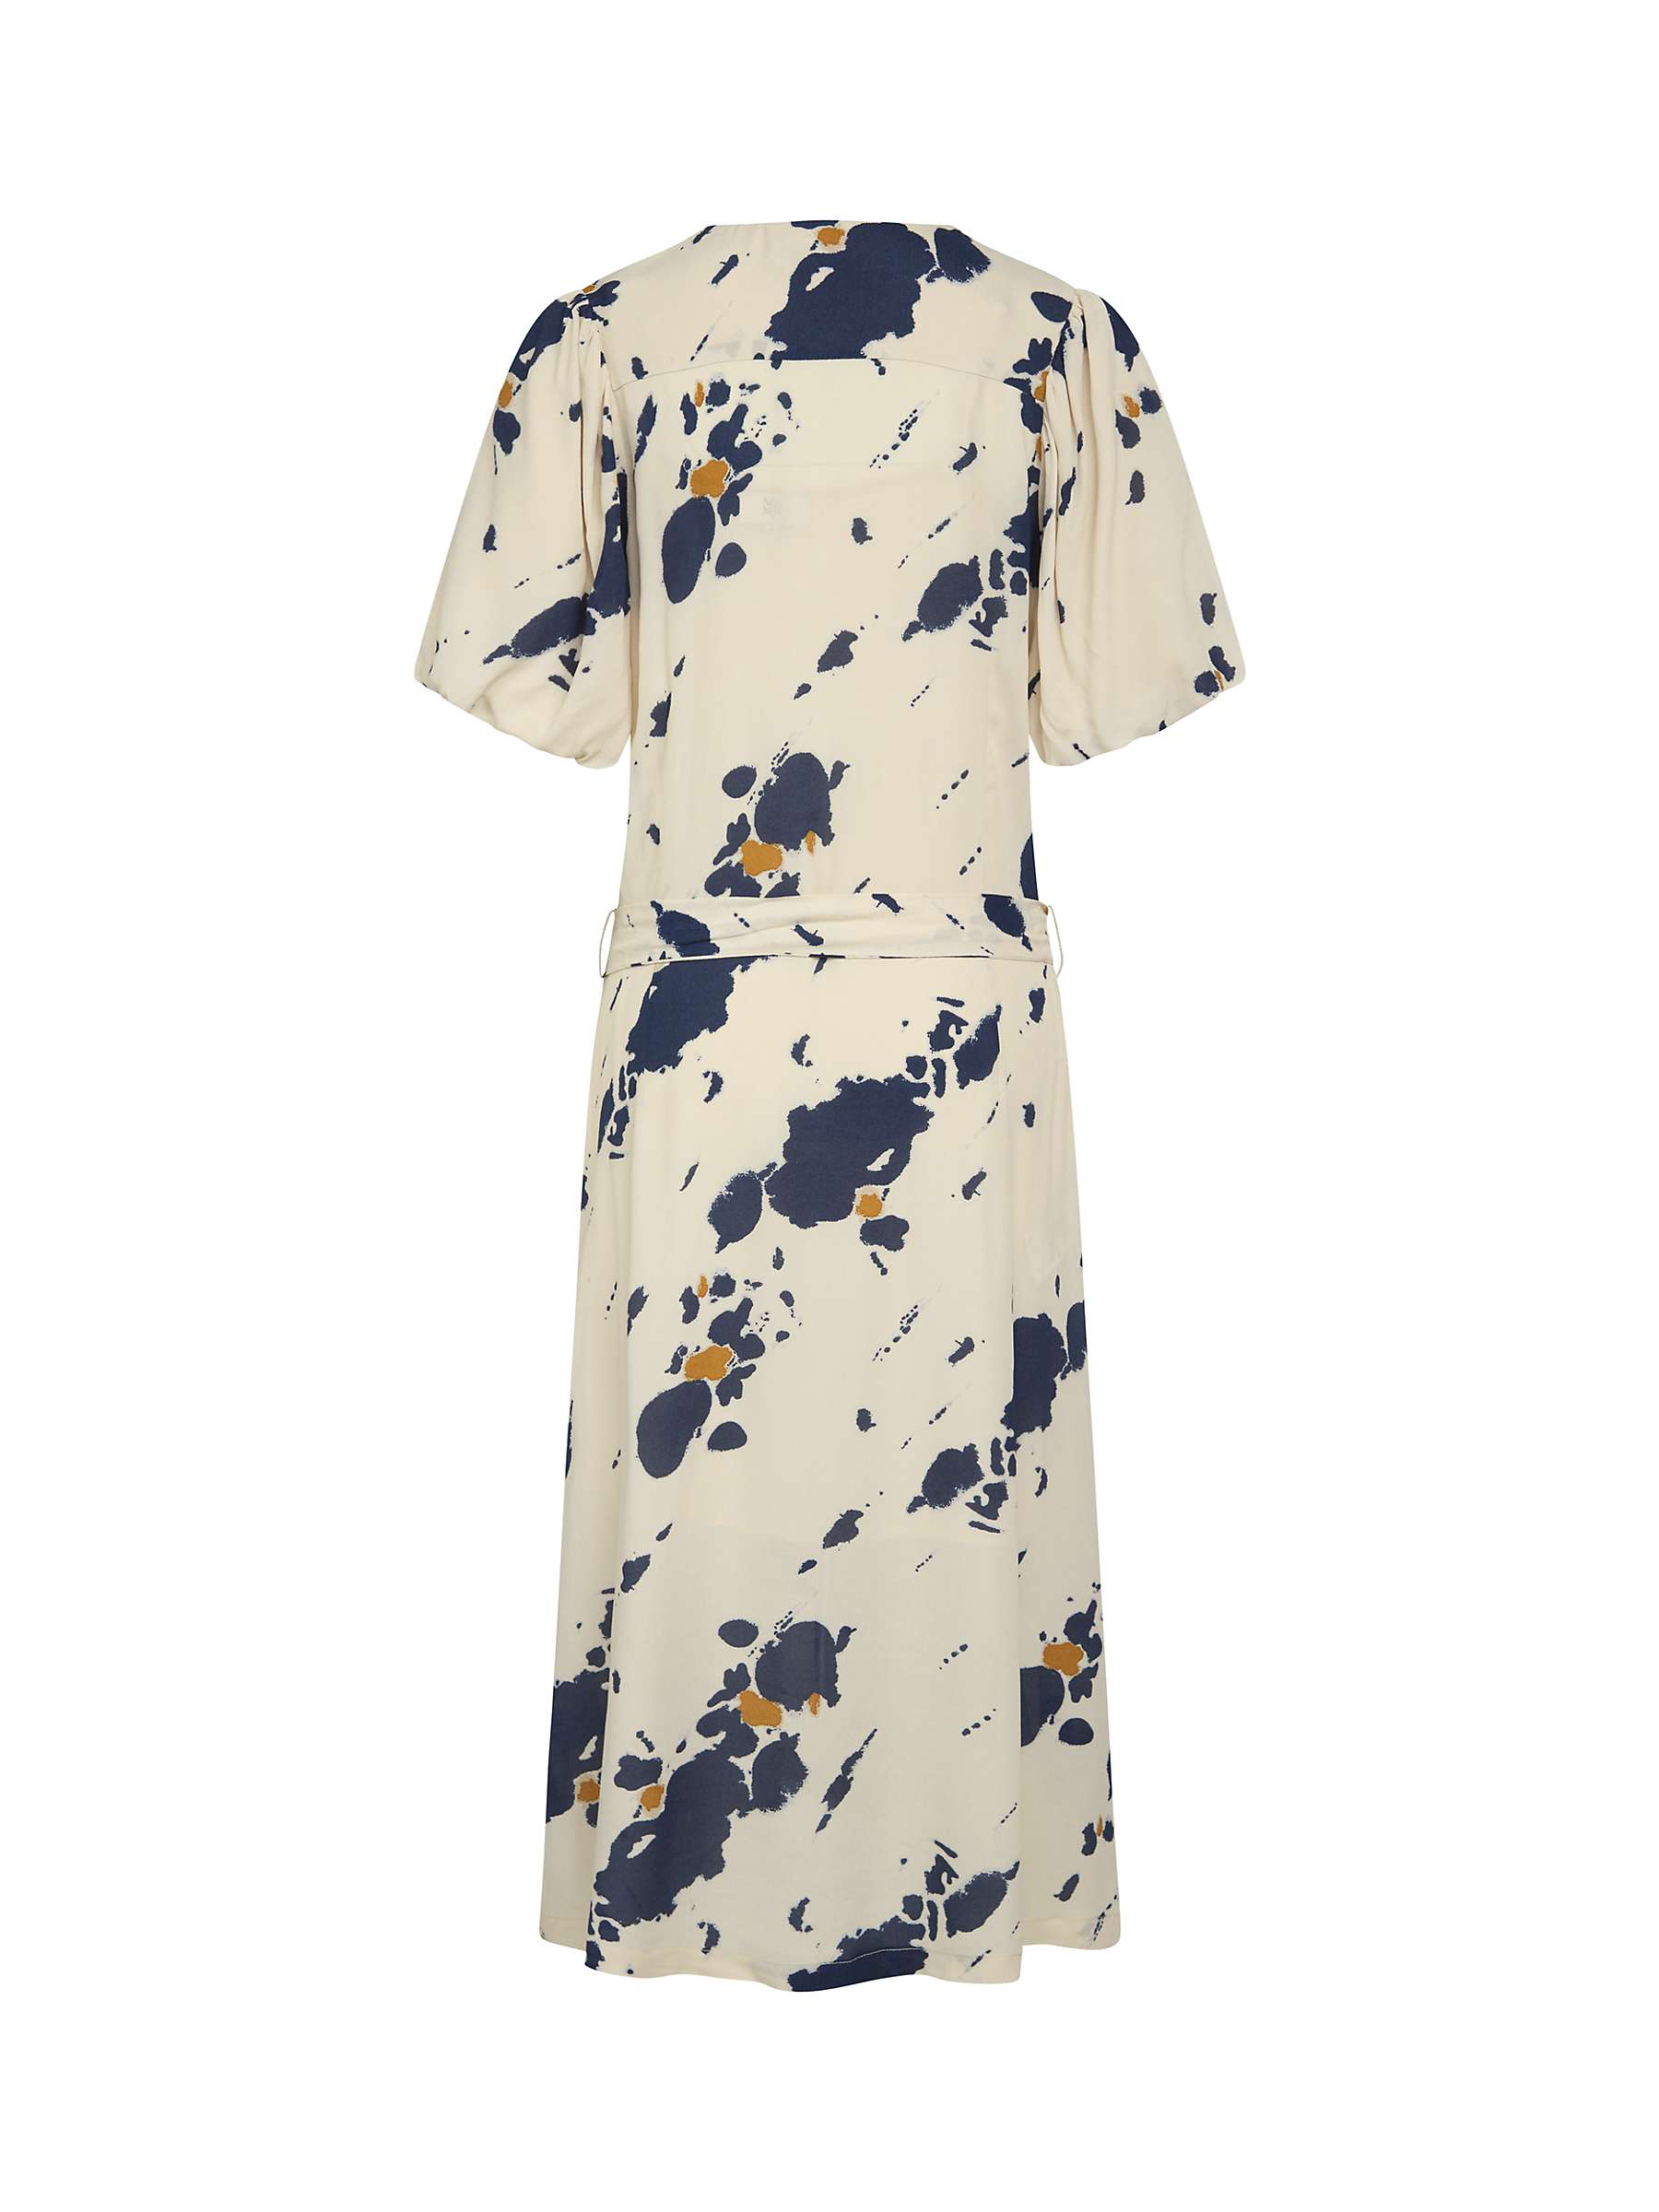 Buy Noa Noa Caroline Maxi 3/4 Sleeve Dress, White/Blue Online at johnlewis.com